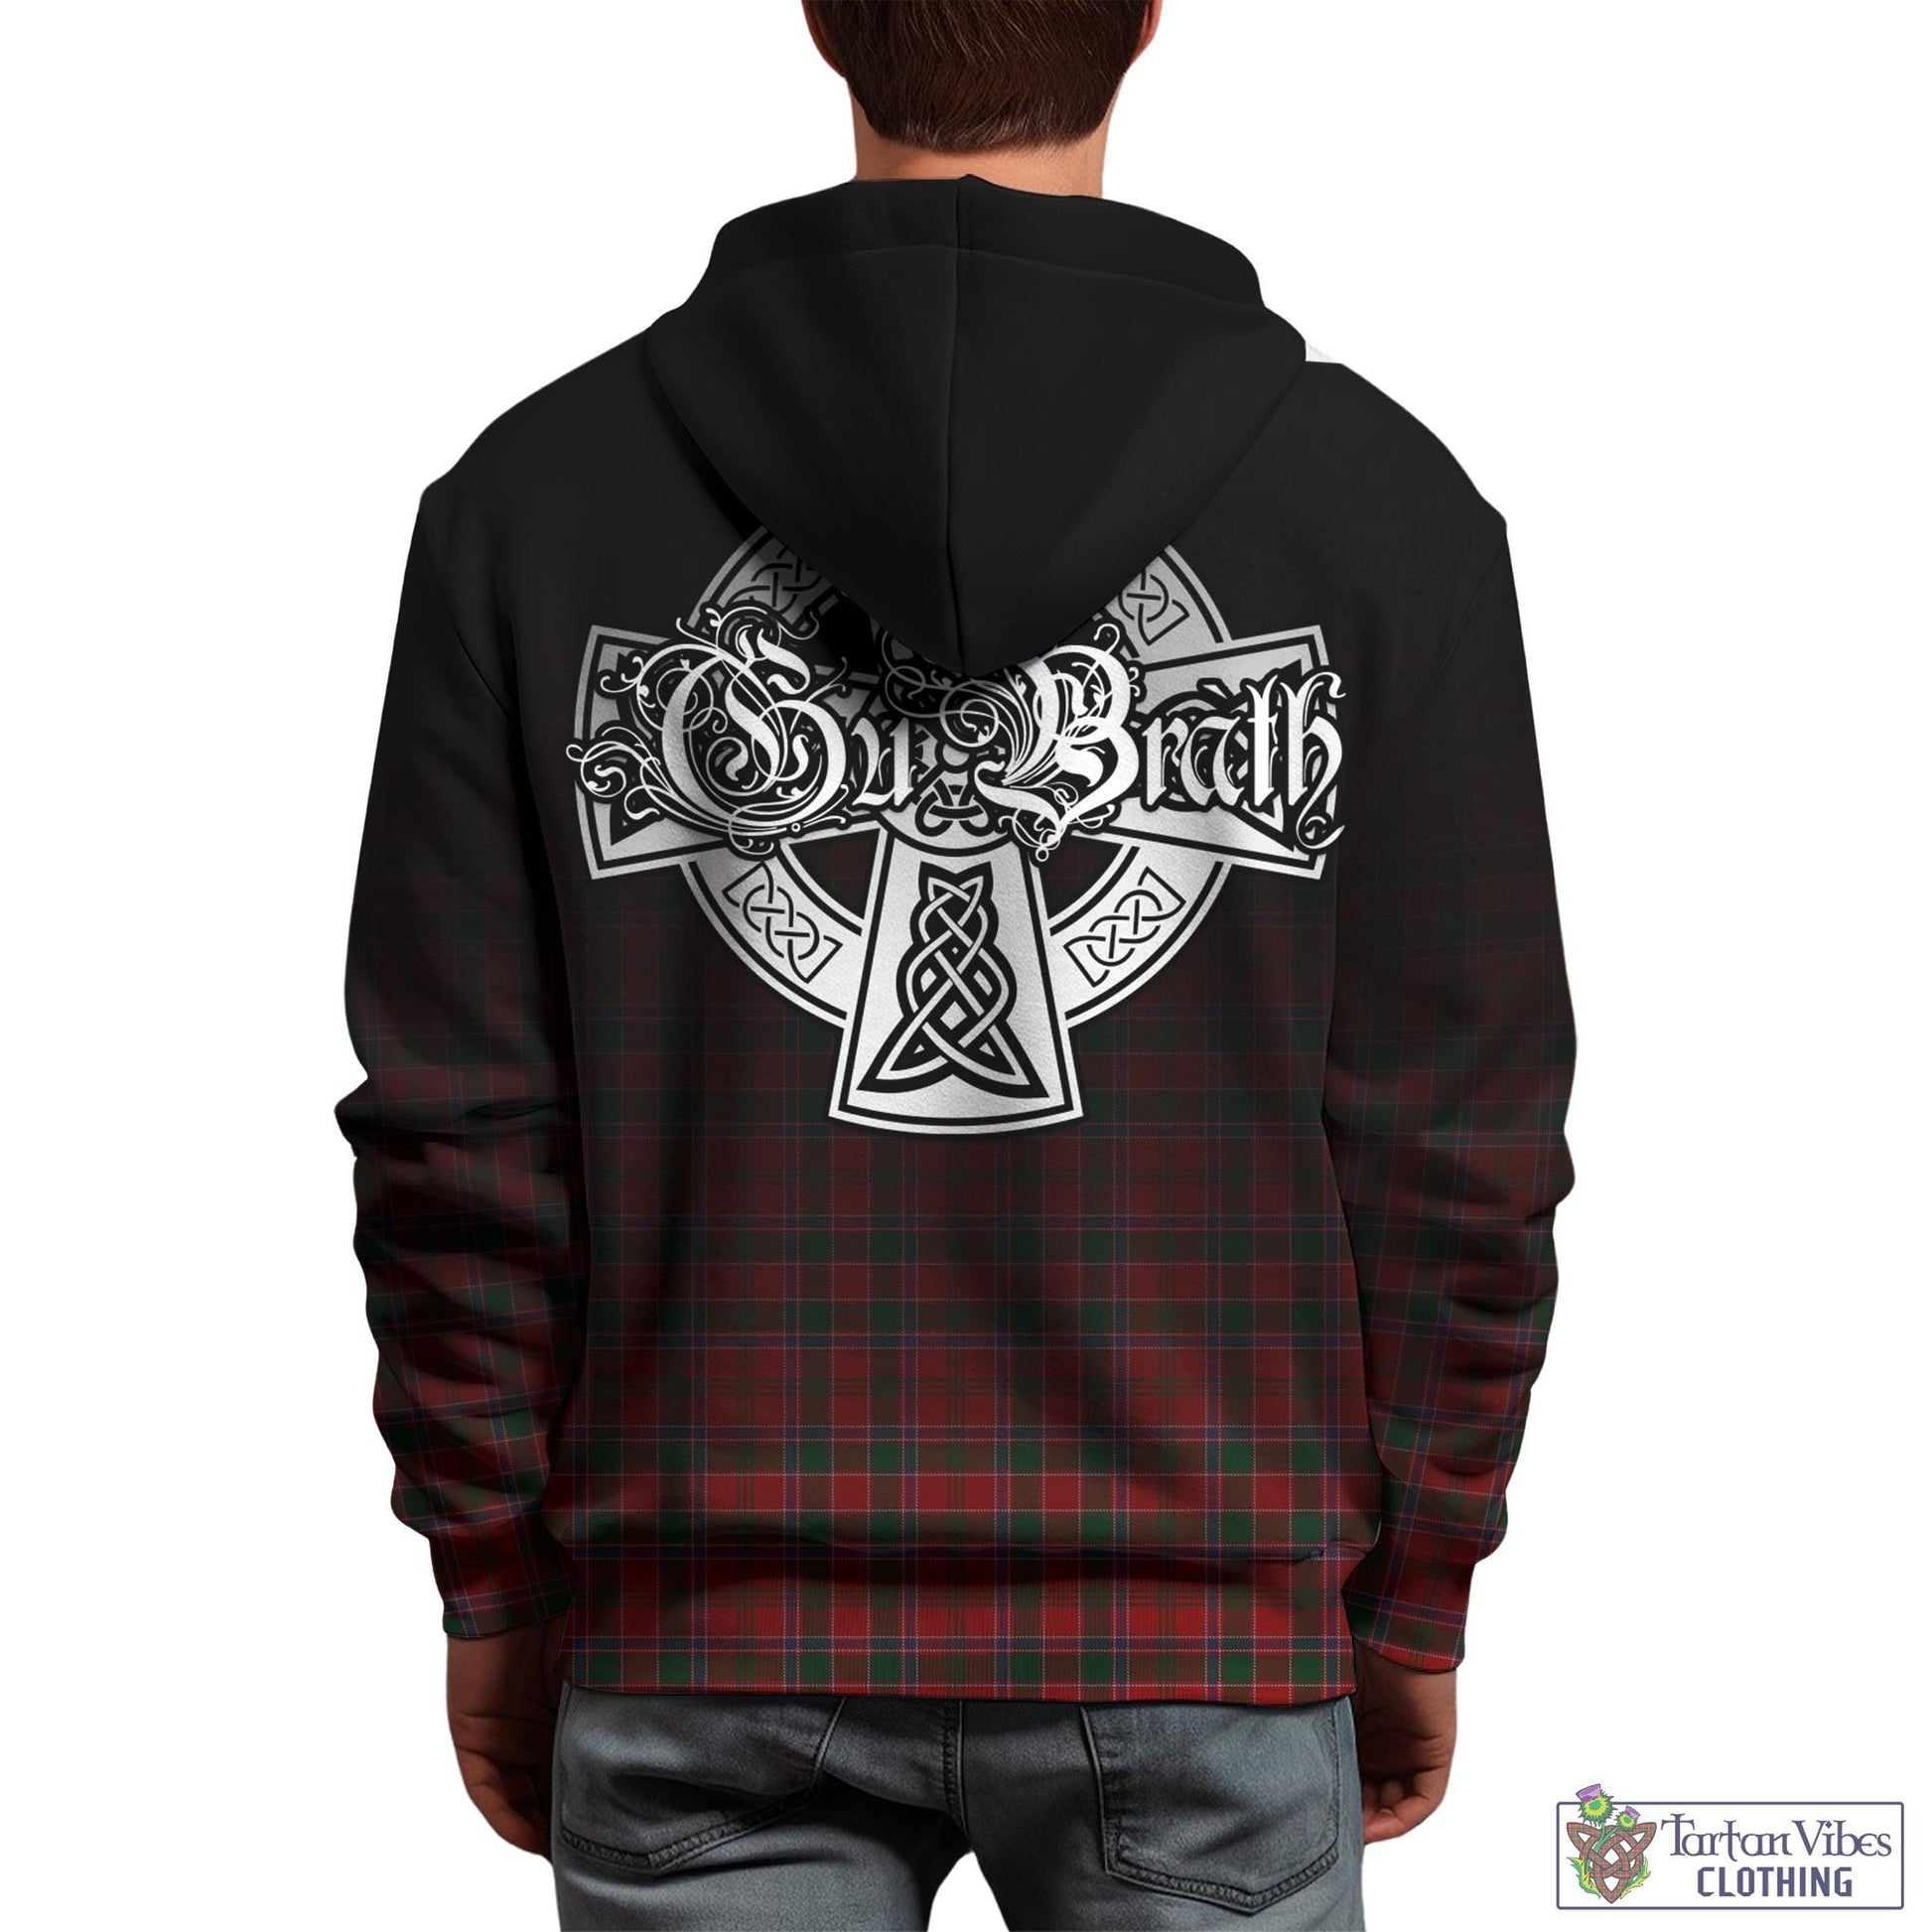 Tartan Vibes Clothing Dalzell (Dalziel) Tartan Hoodie Featuring Alba Gu Brath Family Crest Celtic Inspired